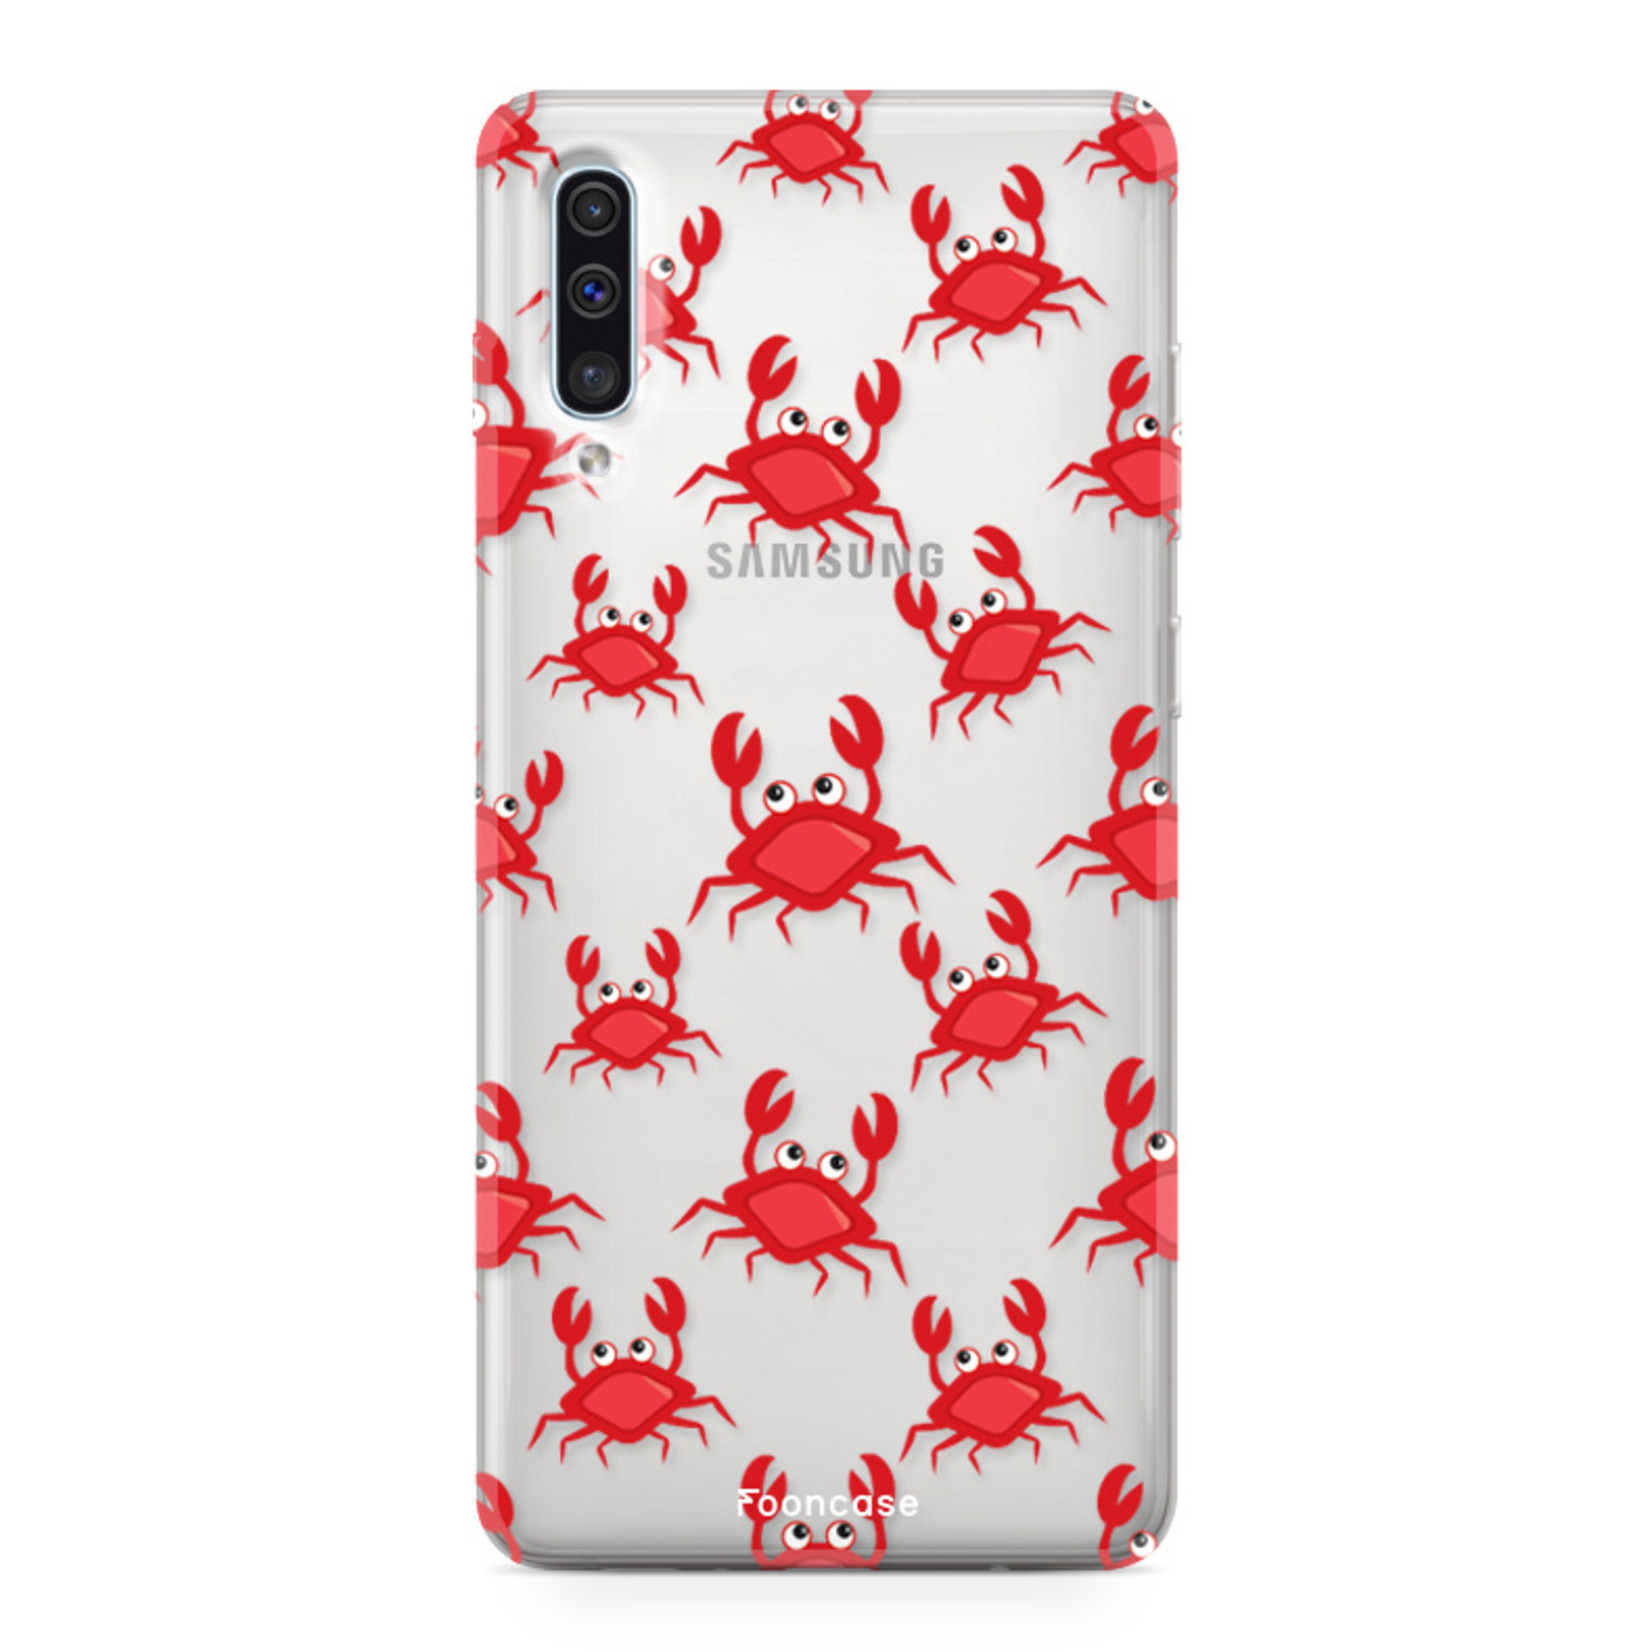 Samsung Galaxy A70 hoesje TPU Soft Case - Back Cover - Crabs / Krabbetjes / Krabben